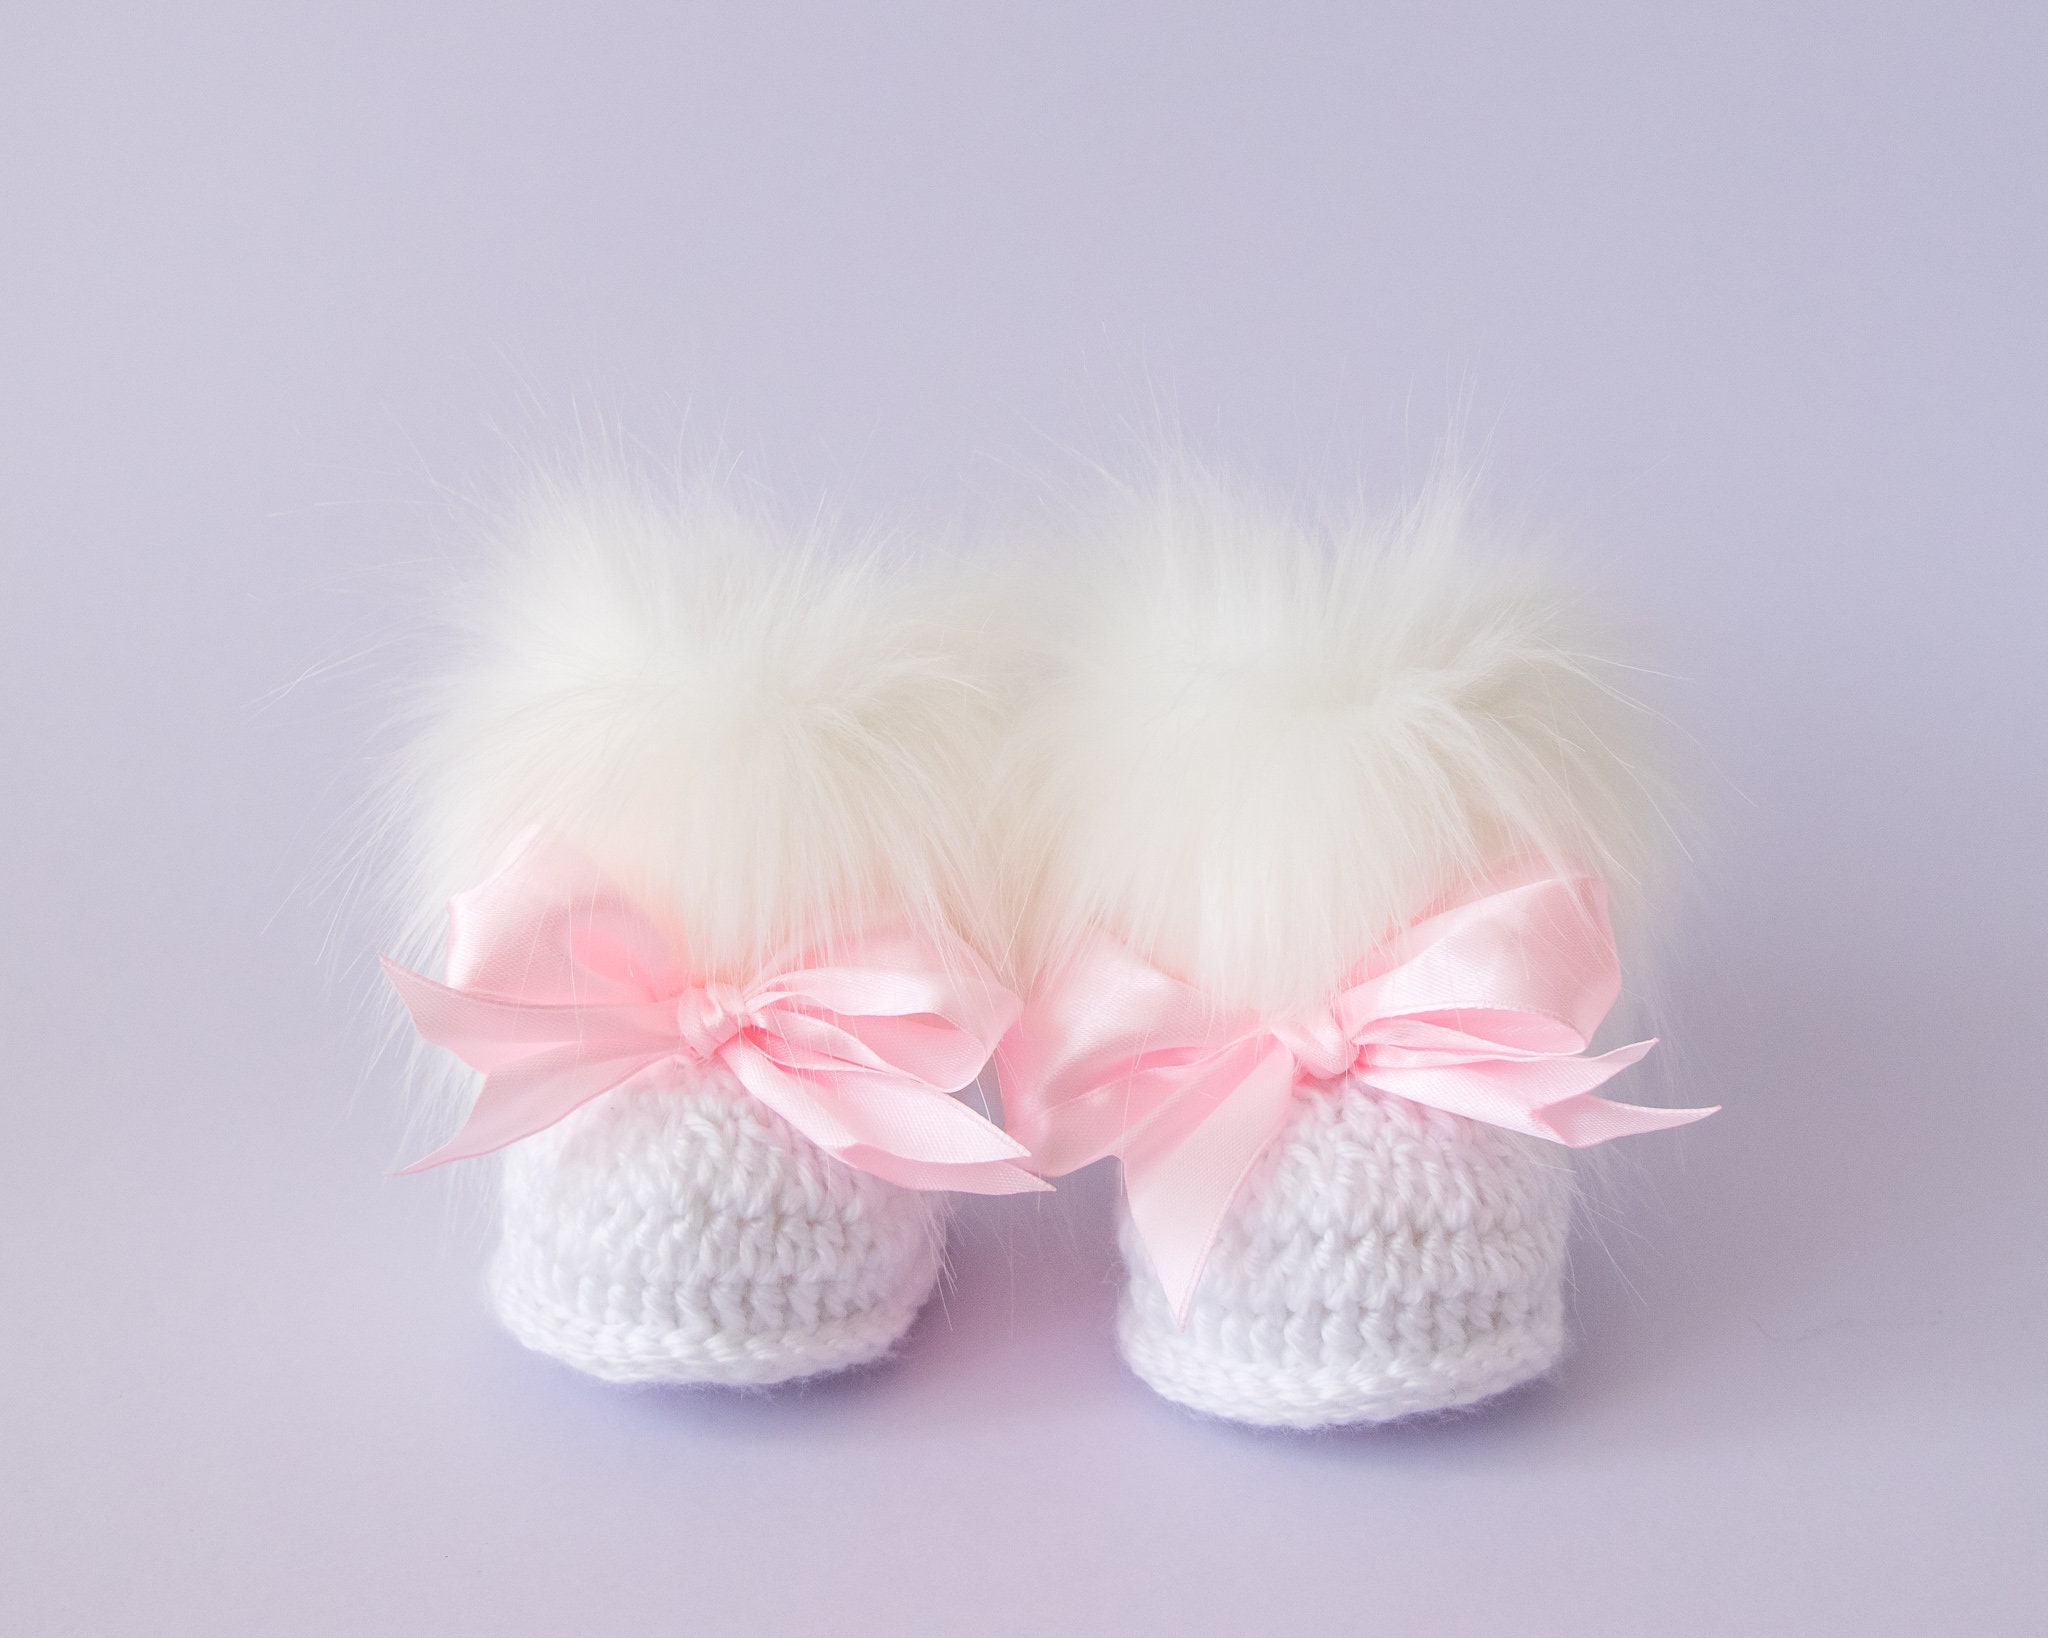 Schoenen Meisjesschoenen Laarzen Handgemaakt Baby meisje gehaakte roze winterlaarzen en muts 